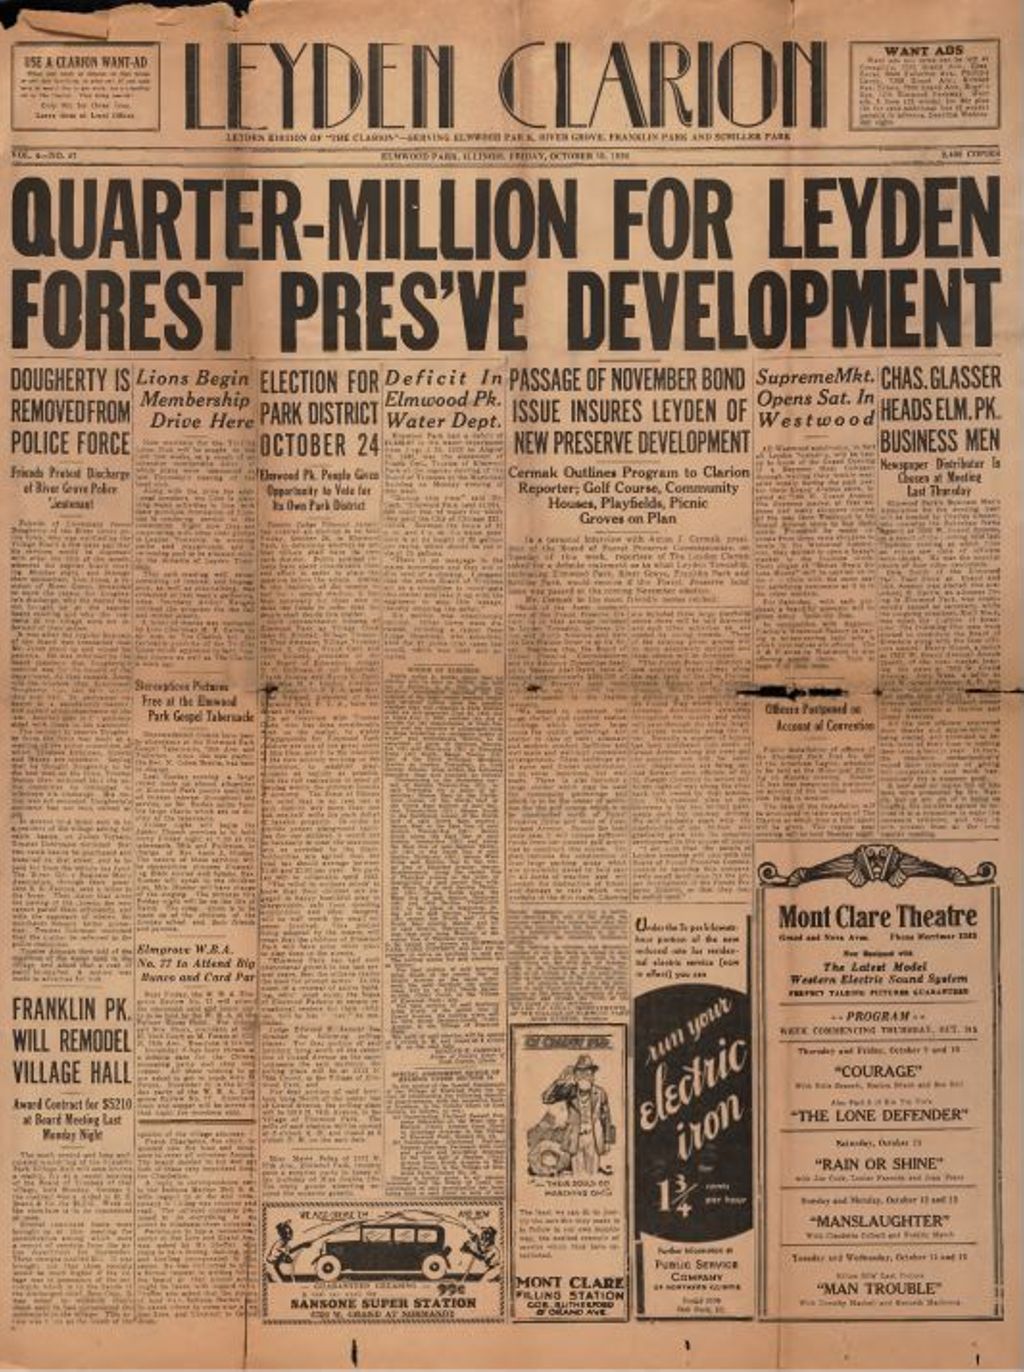 Leyden Clarion, Bond Issue for Leyden Forest Preserve, 1930